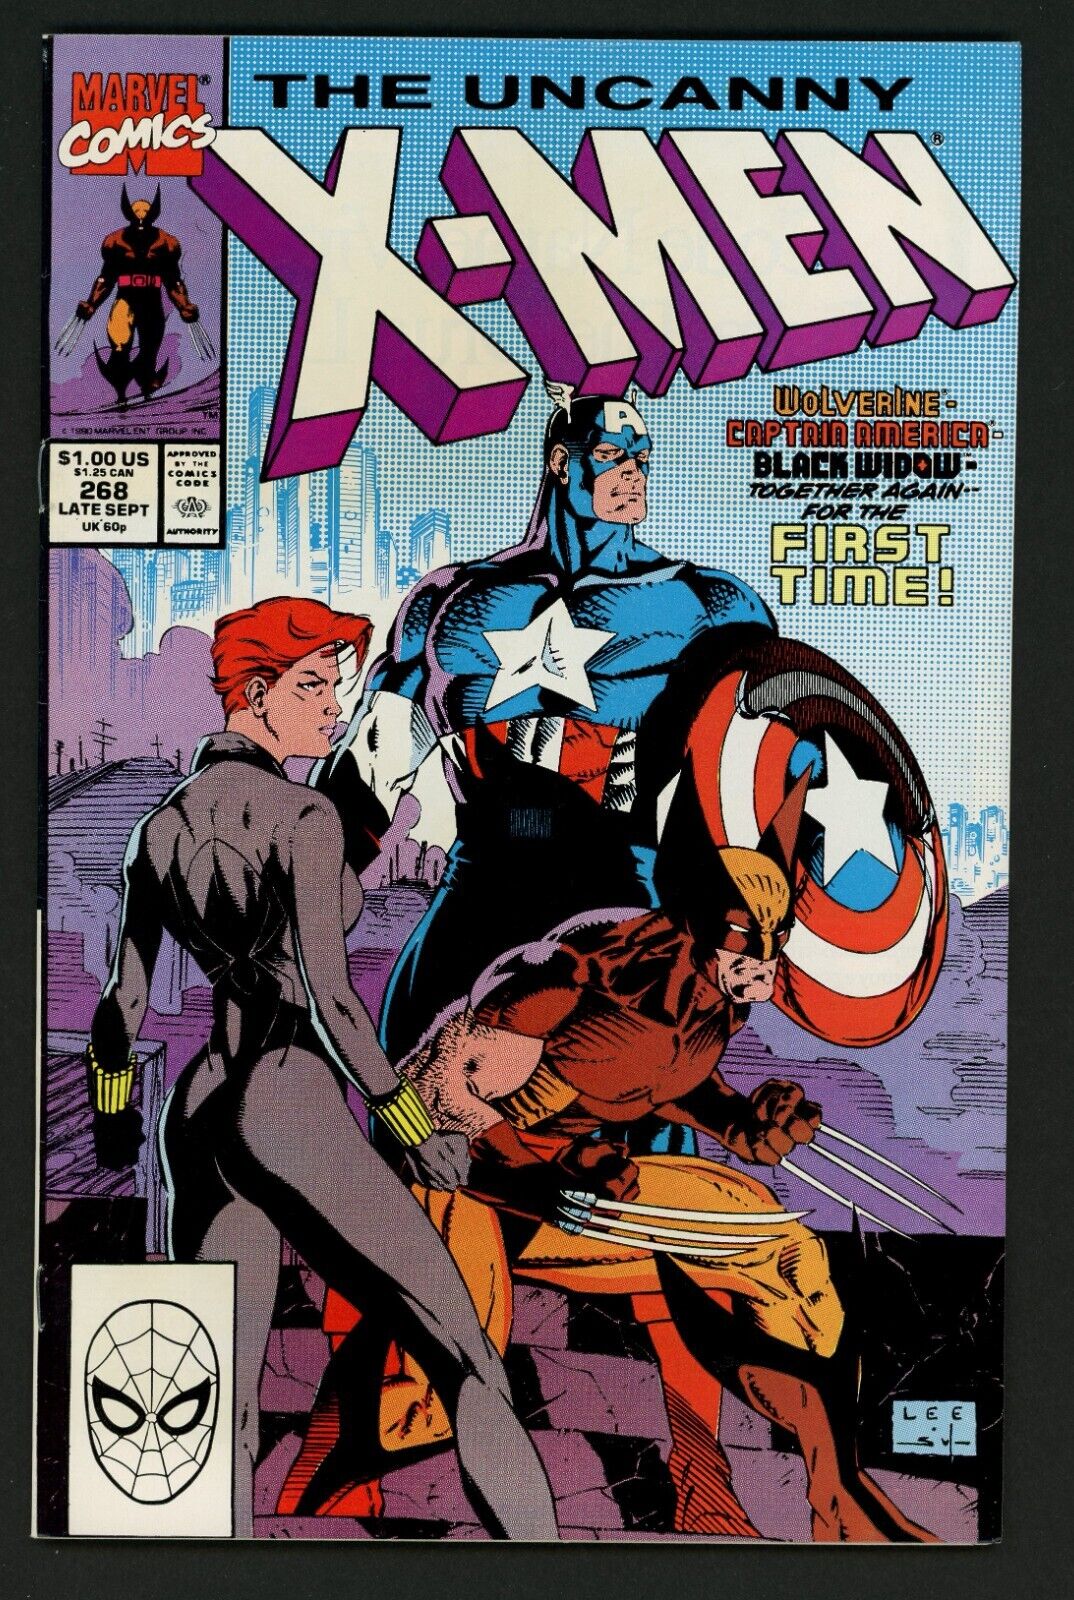 Uncanny X-Men #268 (Marvel, 1990) - Classic Cover art by Jim Lee